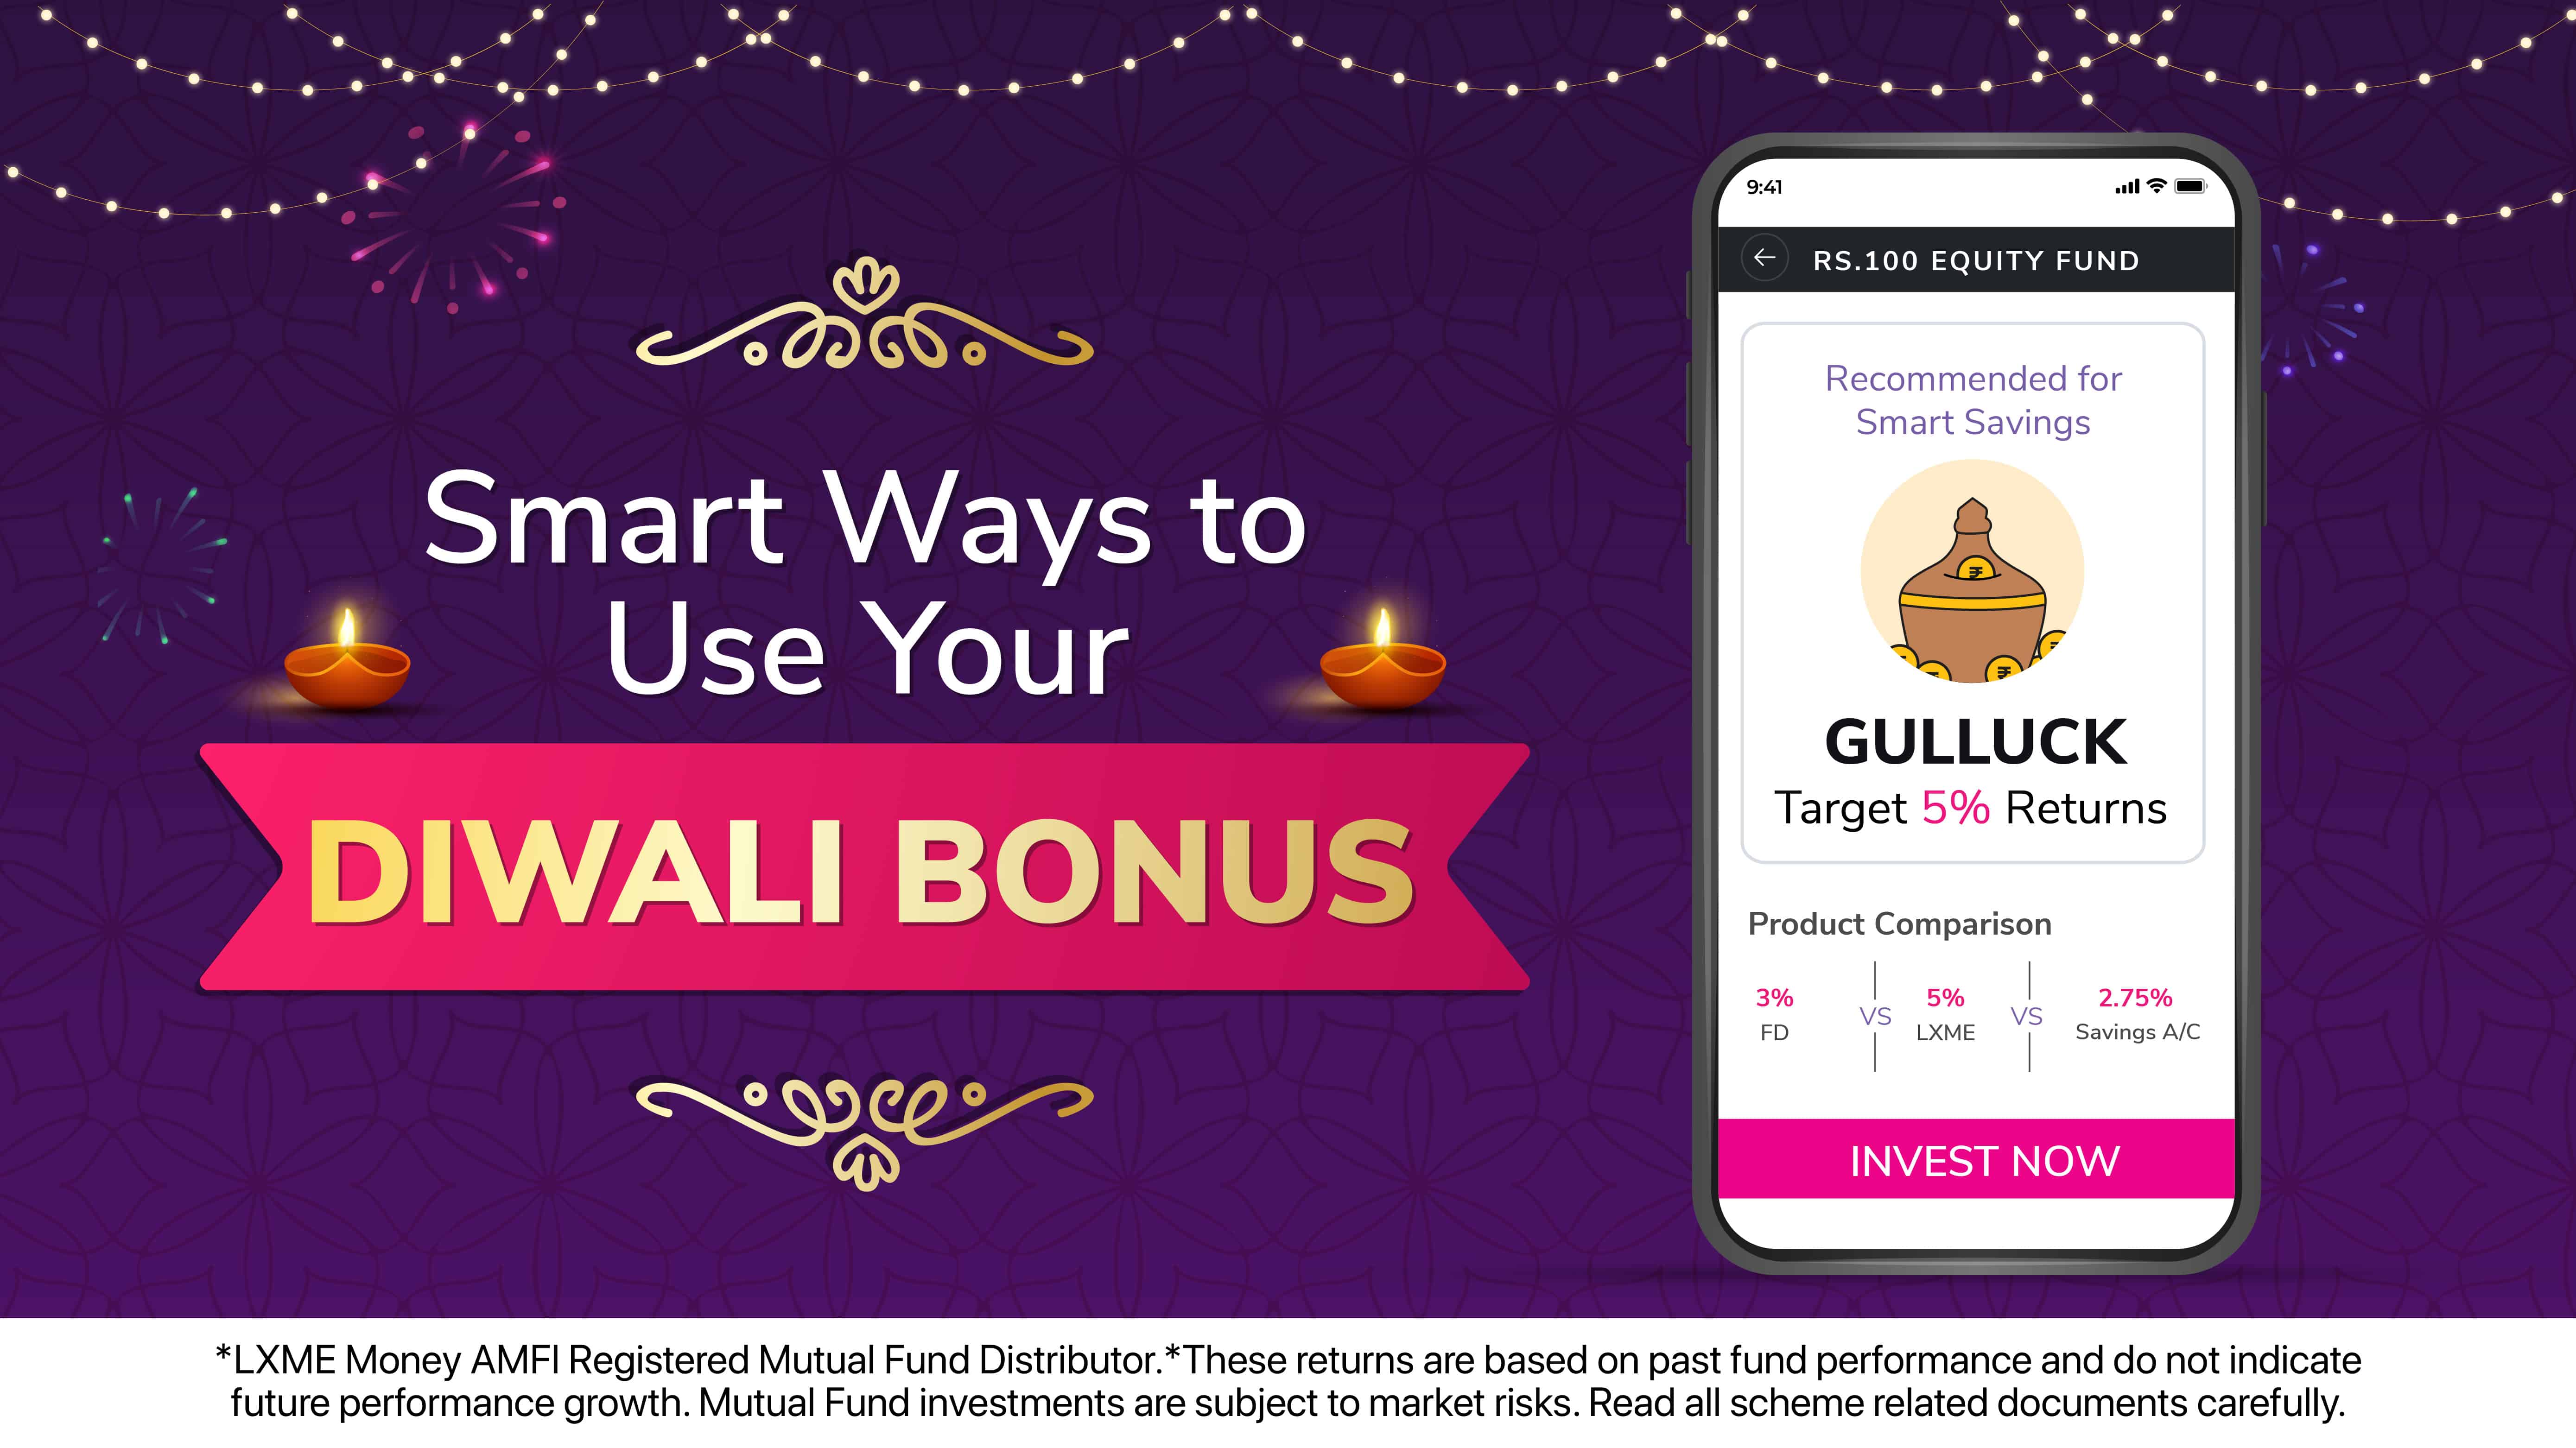 Smart Ways to Use Your Diwali Bonus - Lxme